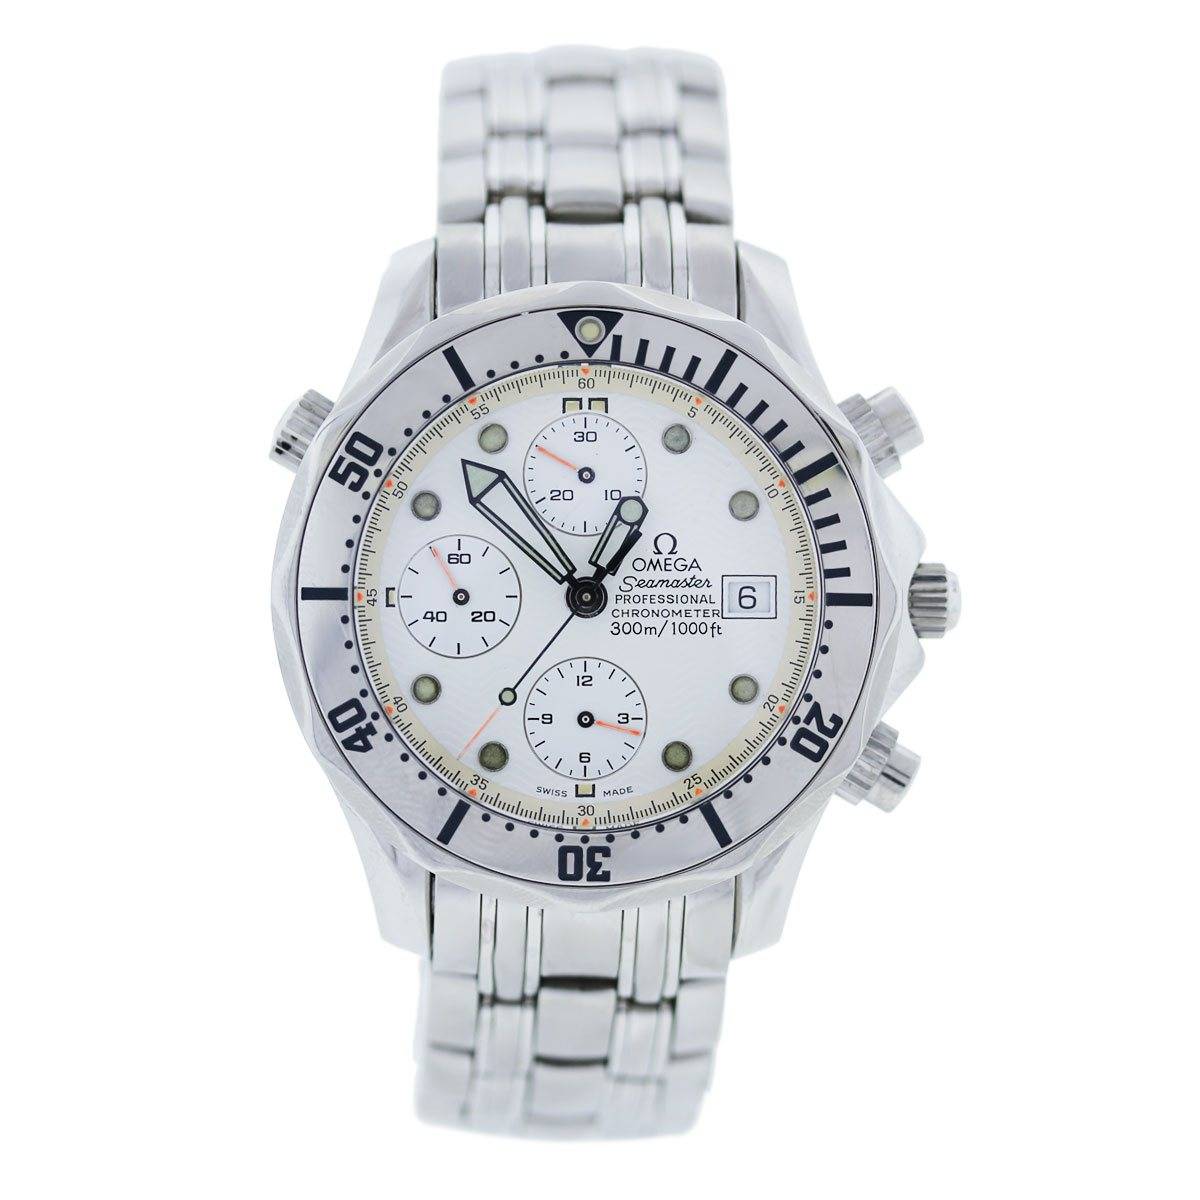 Omega Seamaster Professional Chronograph Watch